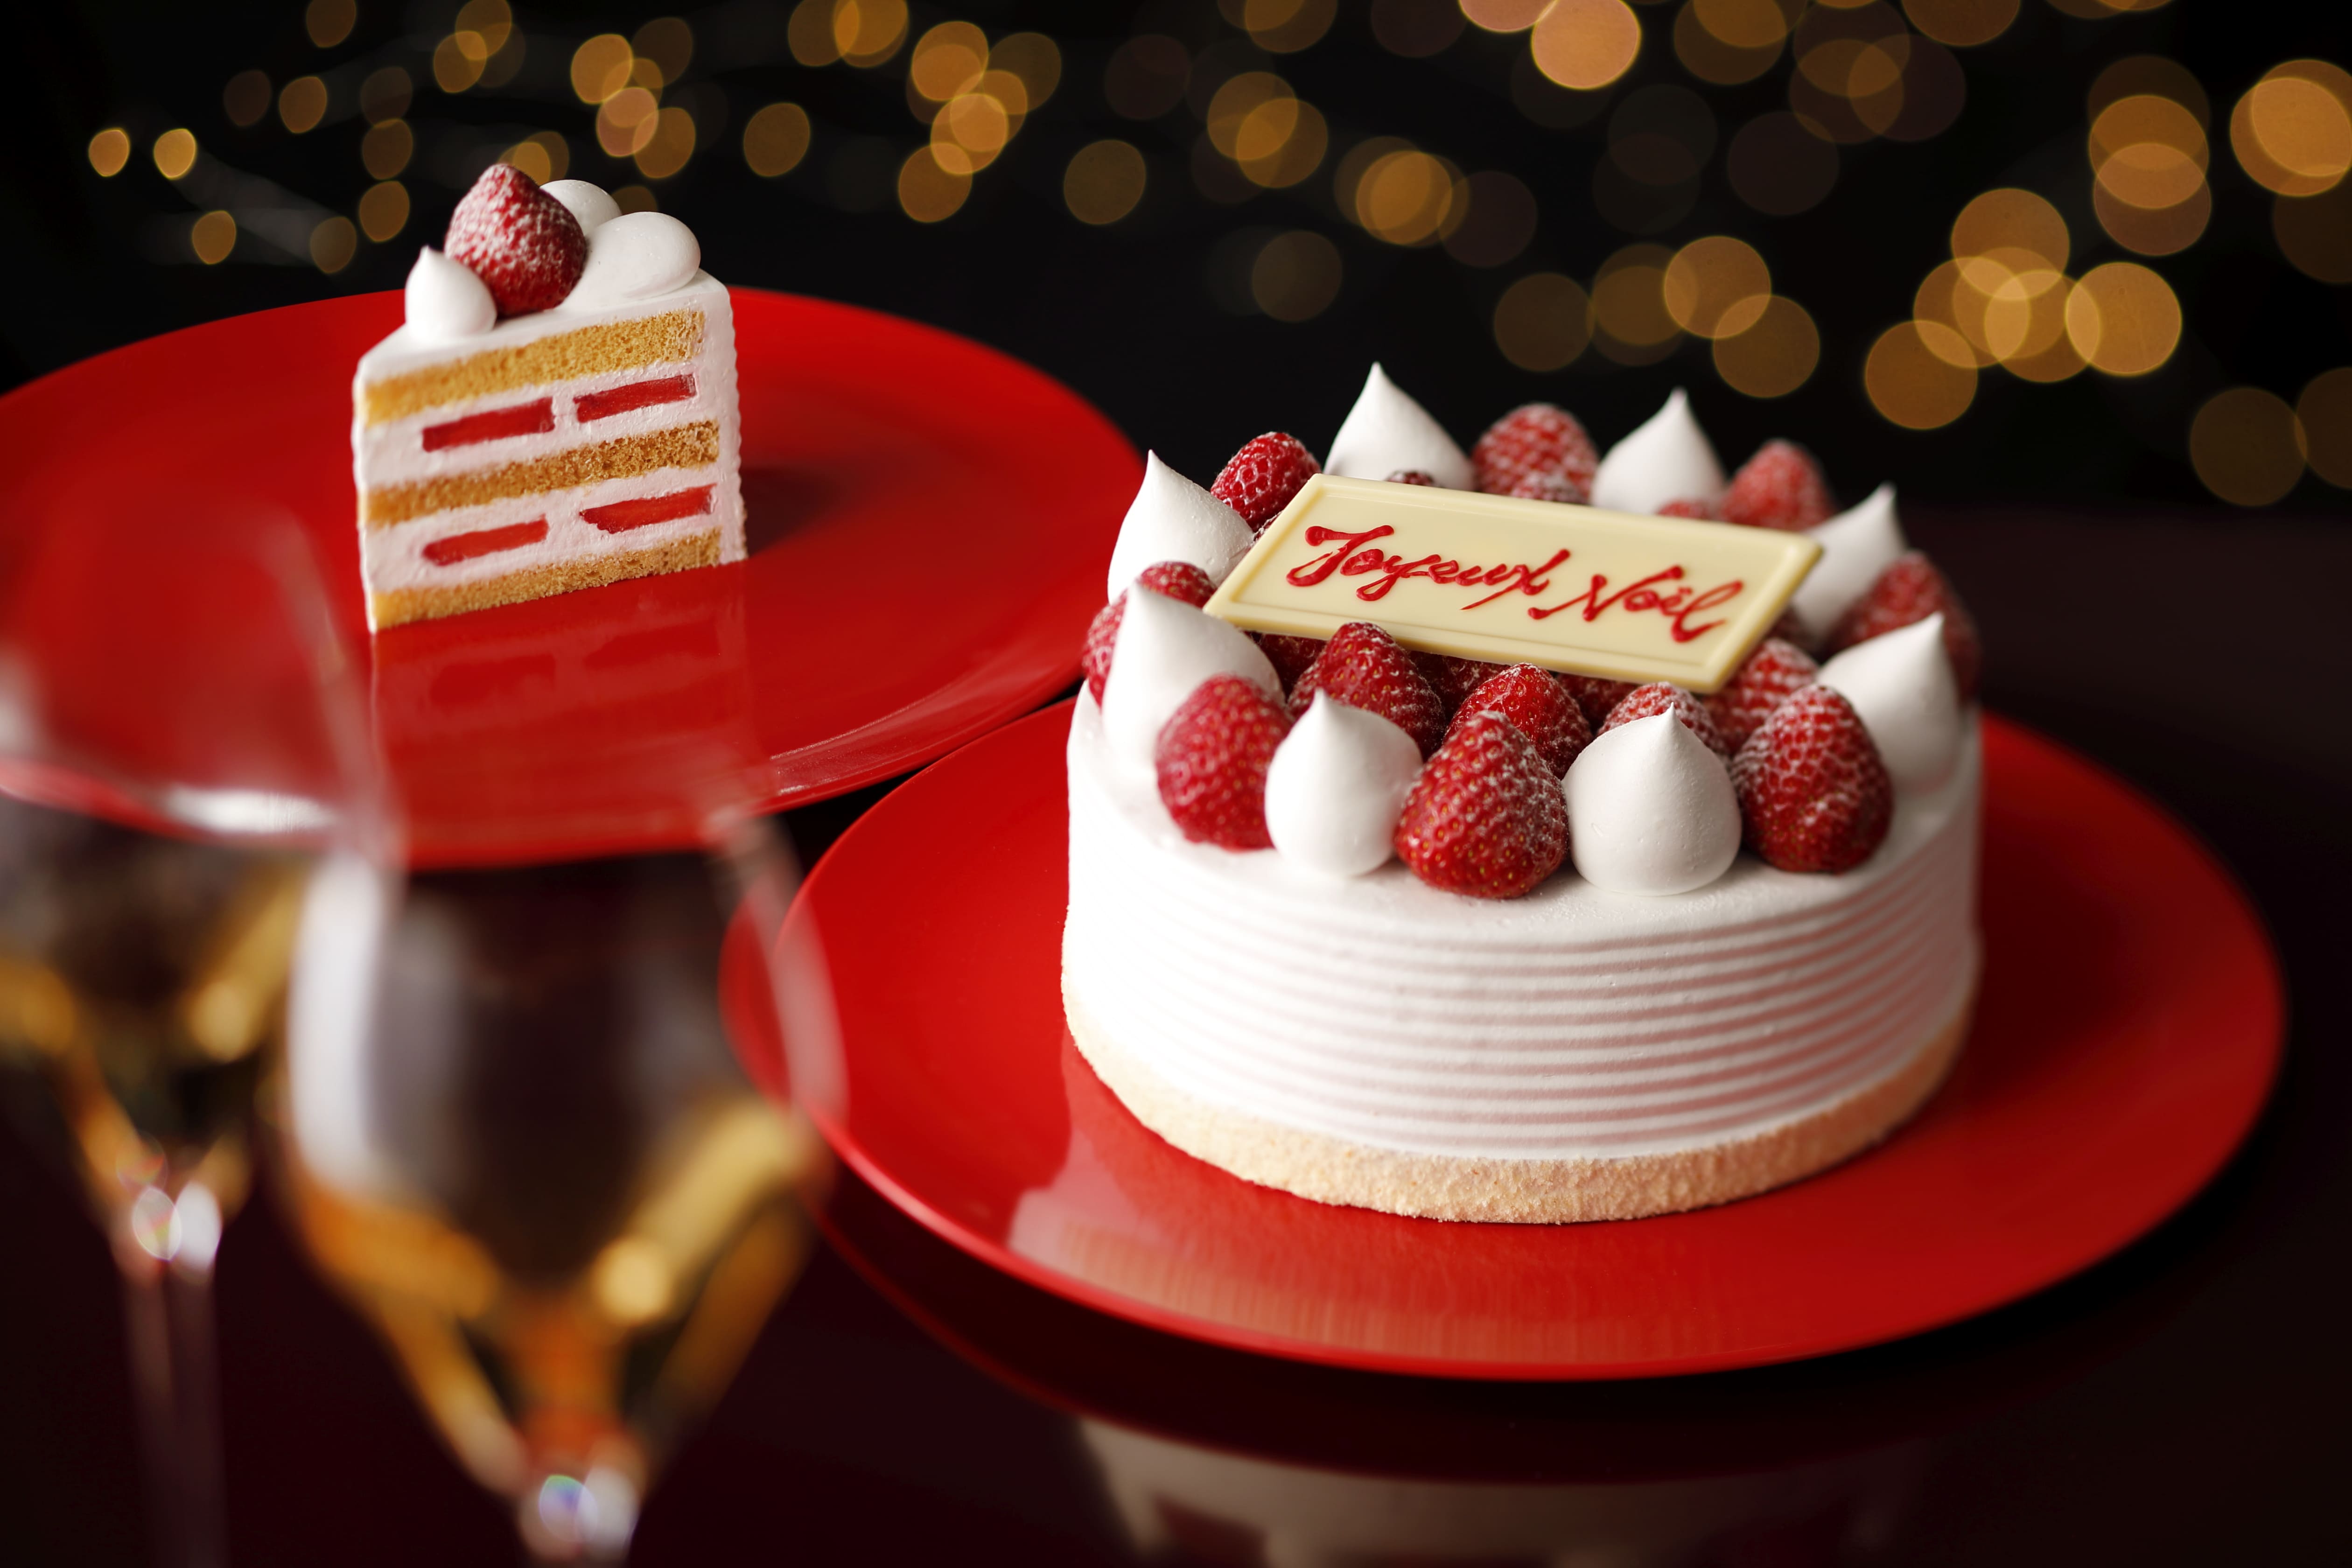 Withコロナ時代の おうち贅沢 を叶える新サイズが登場 Super Christmas Cake 株式会社ニュー オータニのプレスリリース